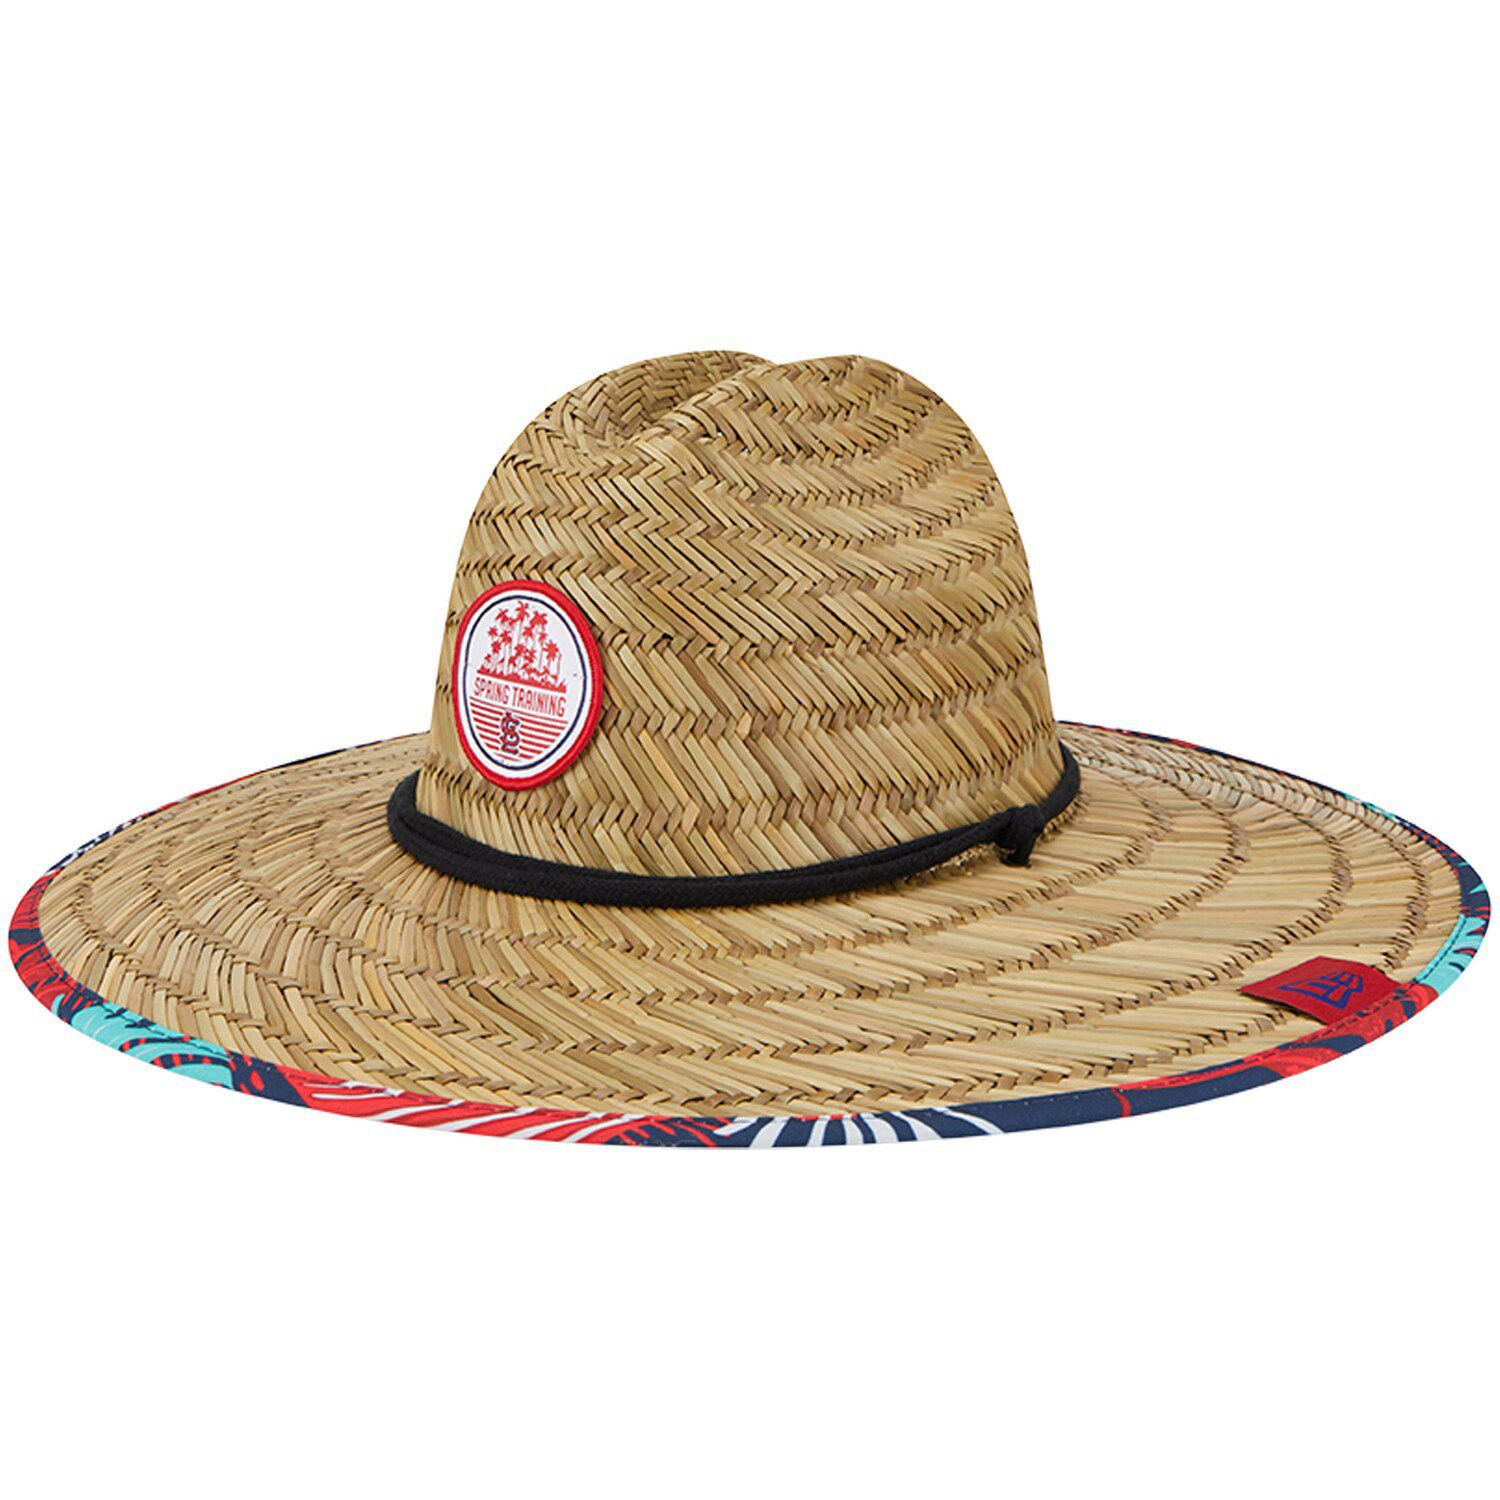 Reyn Spooner Men's One Size New York Yankees scenic Straw Hat - Each